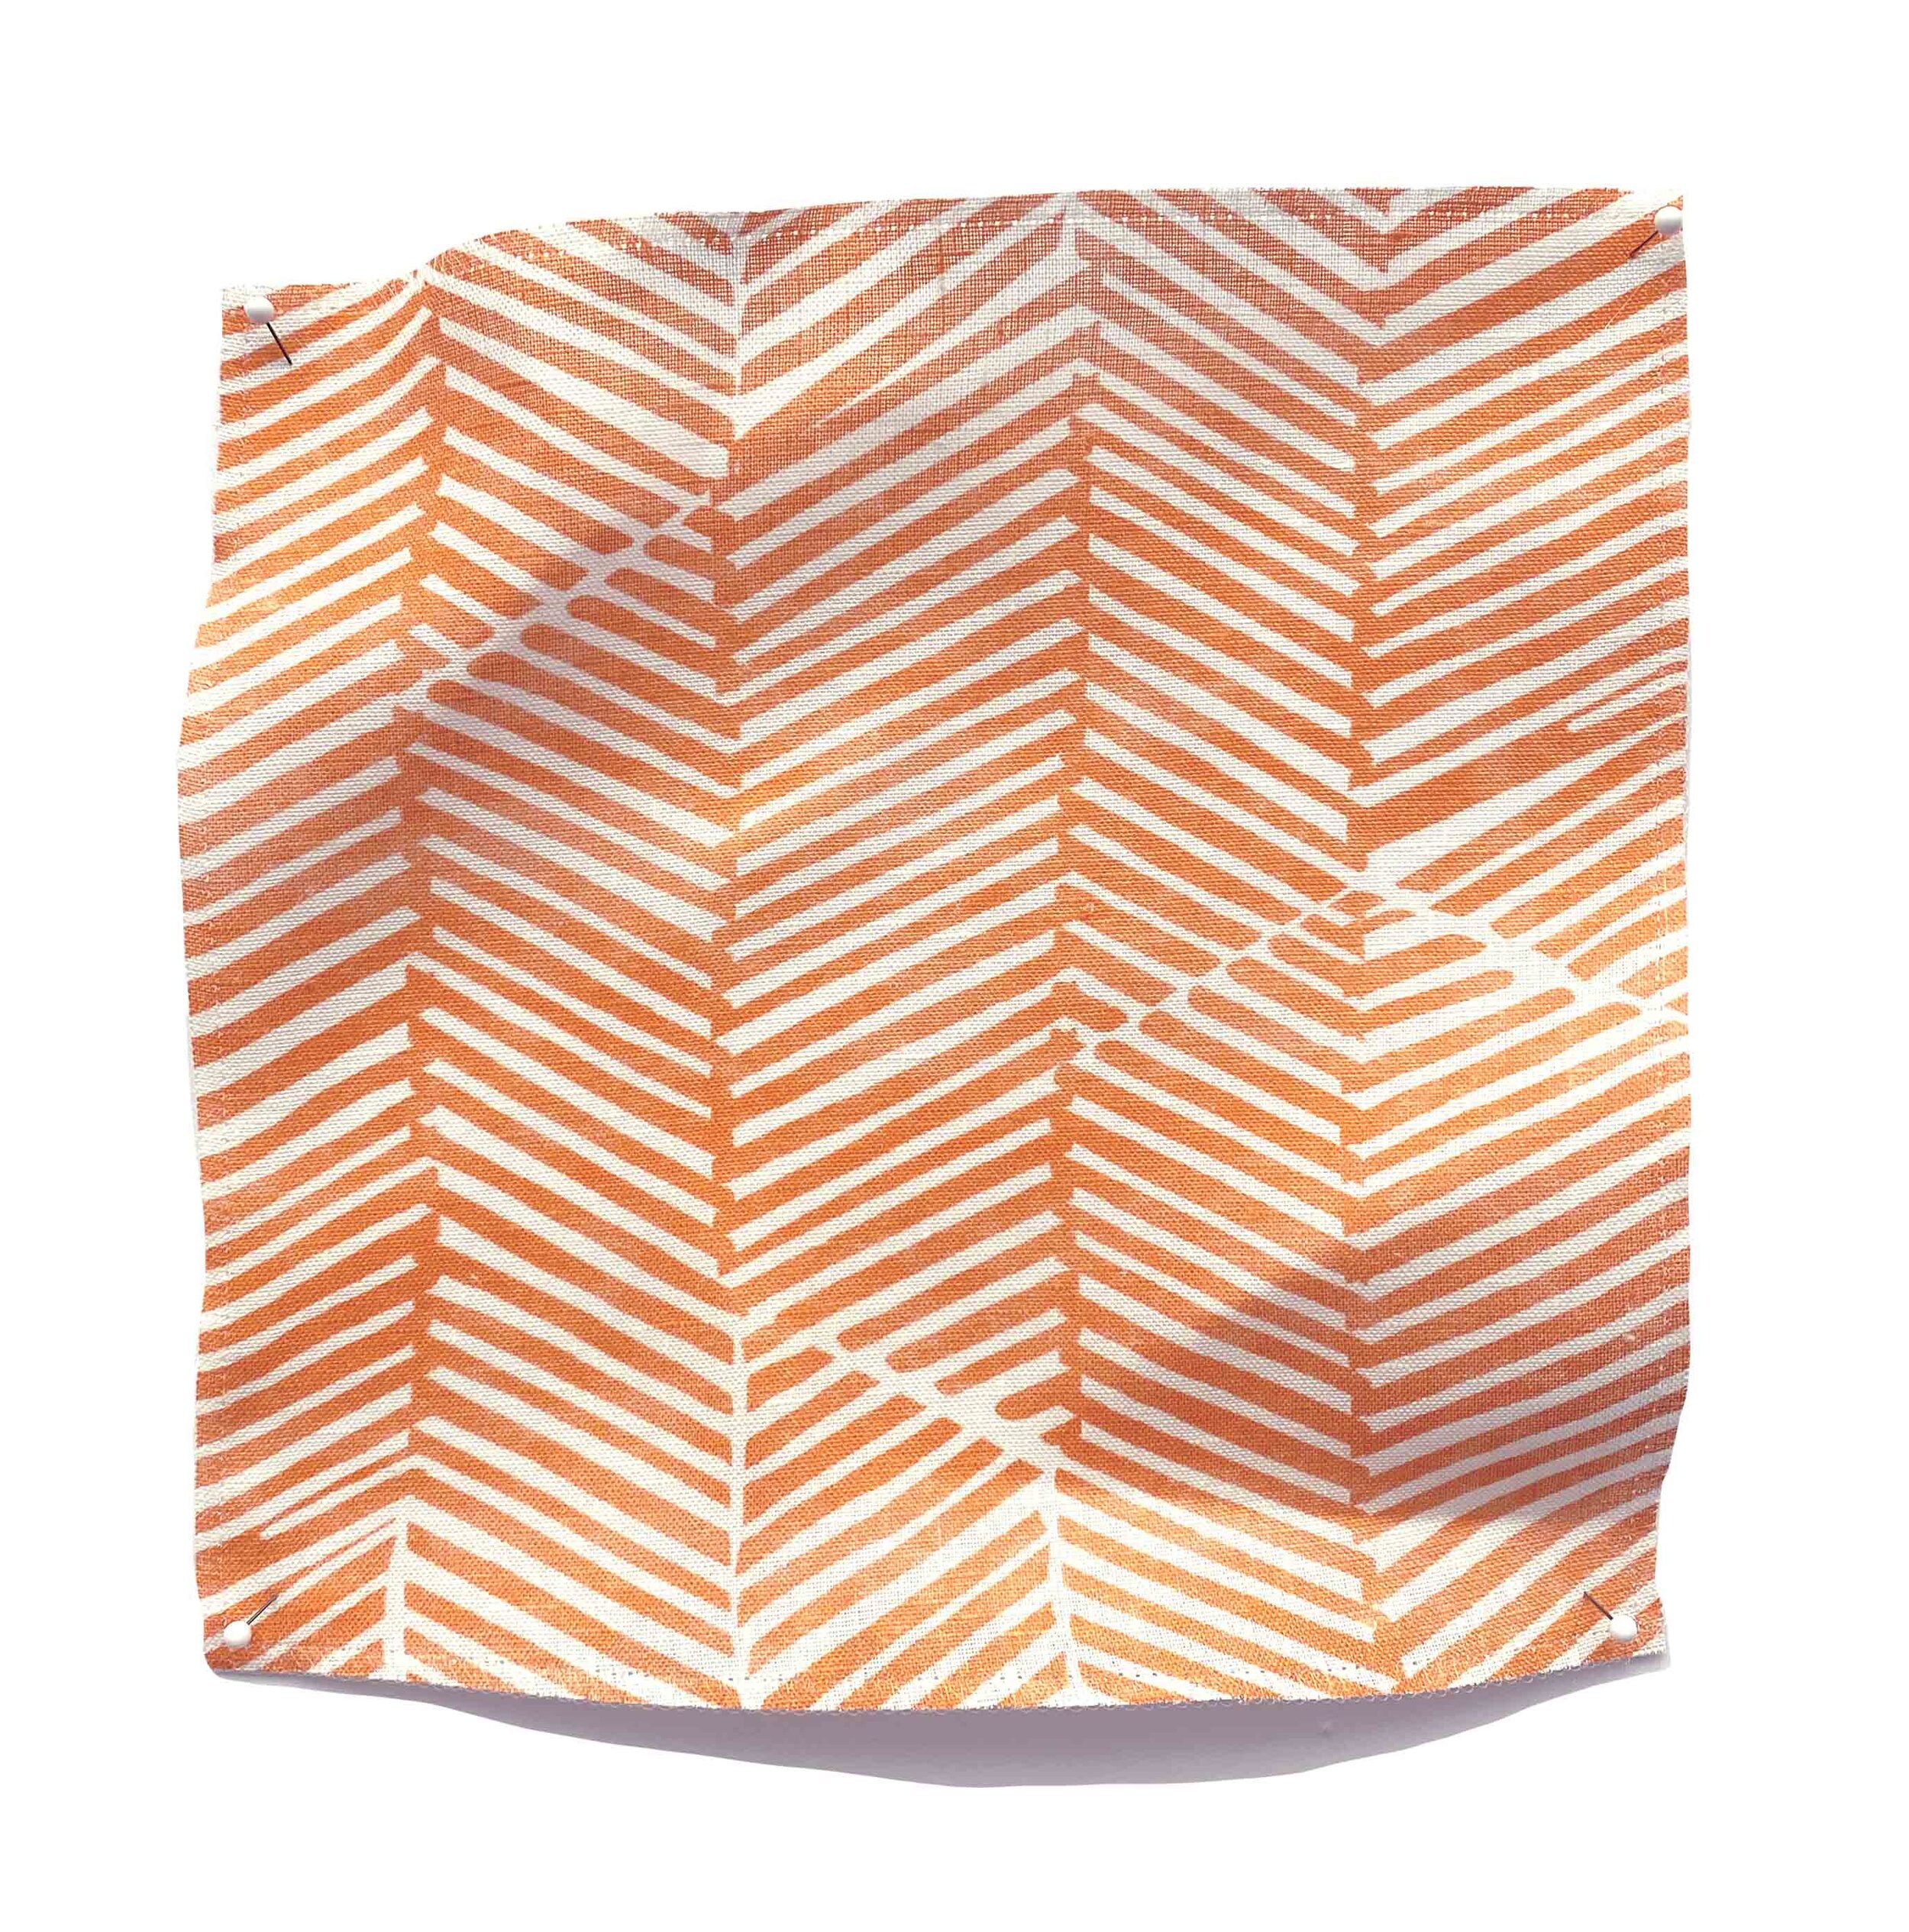 Imogen Heath Aria Tangerine linen fabric